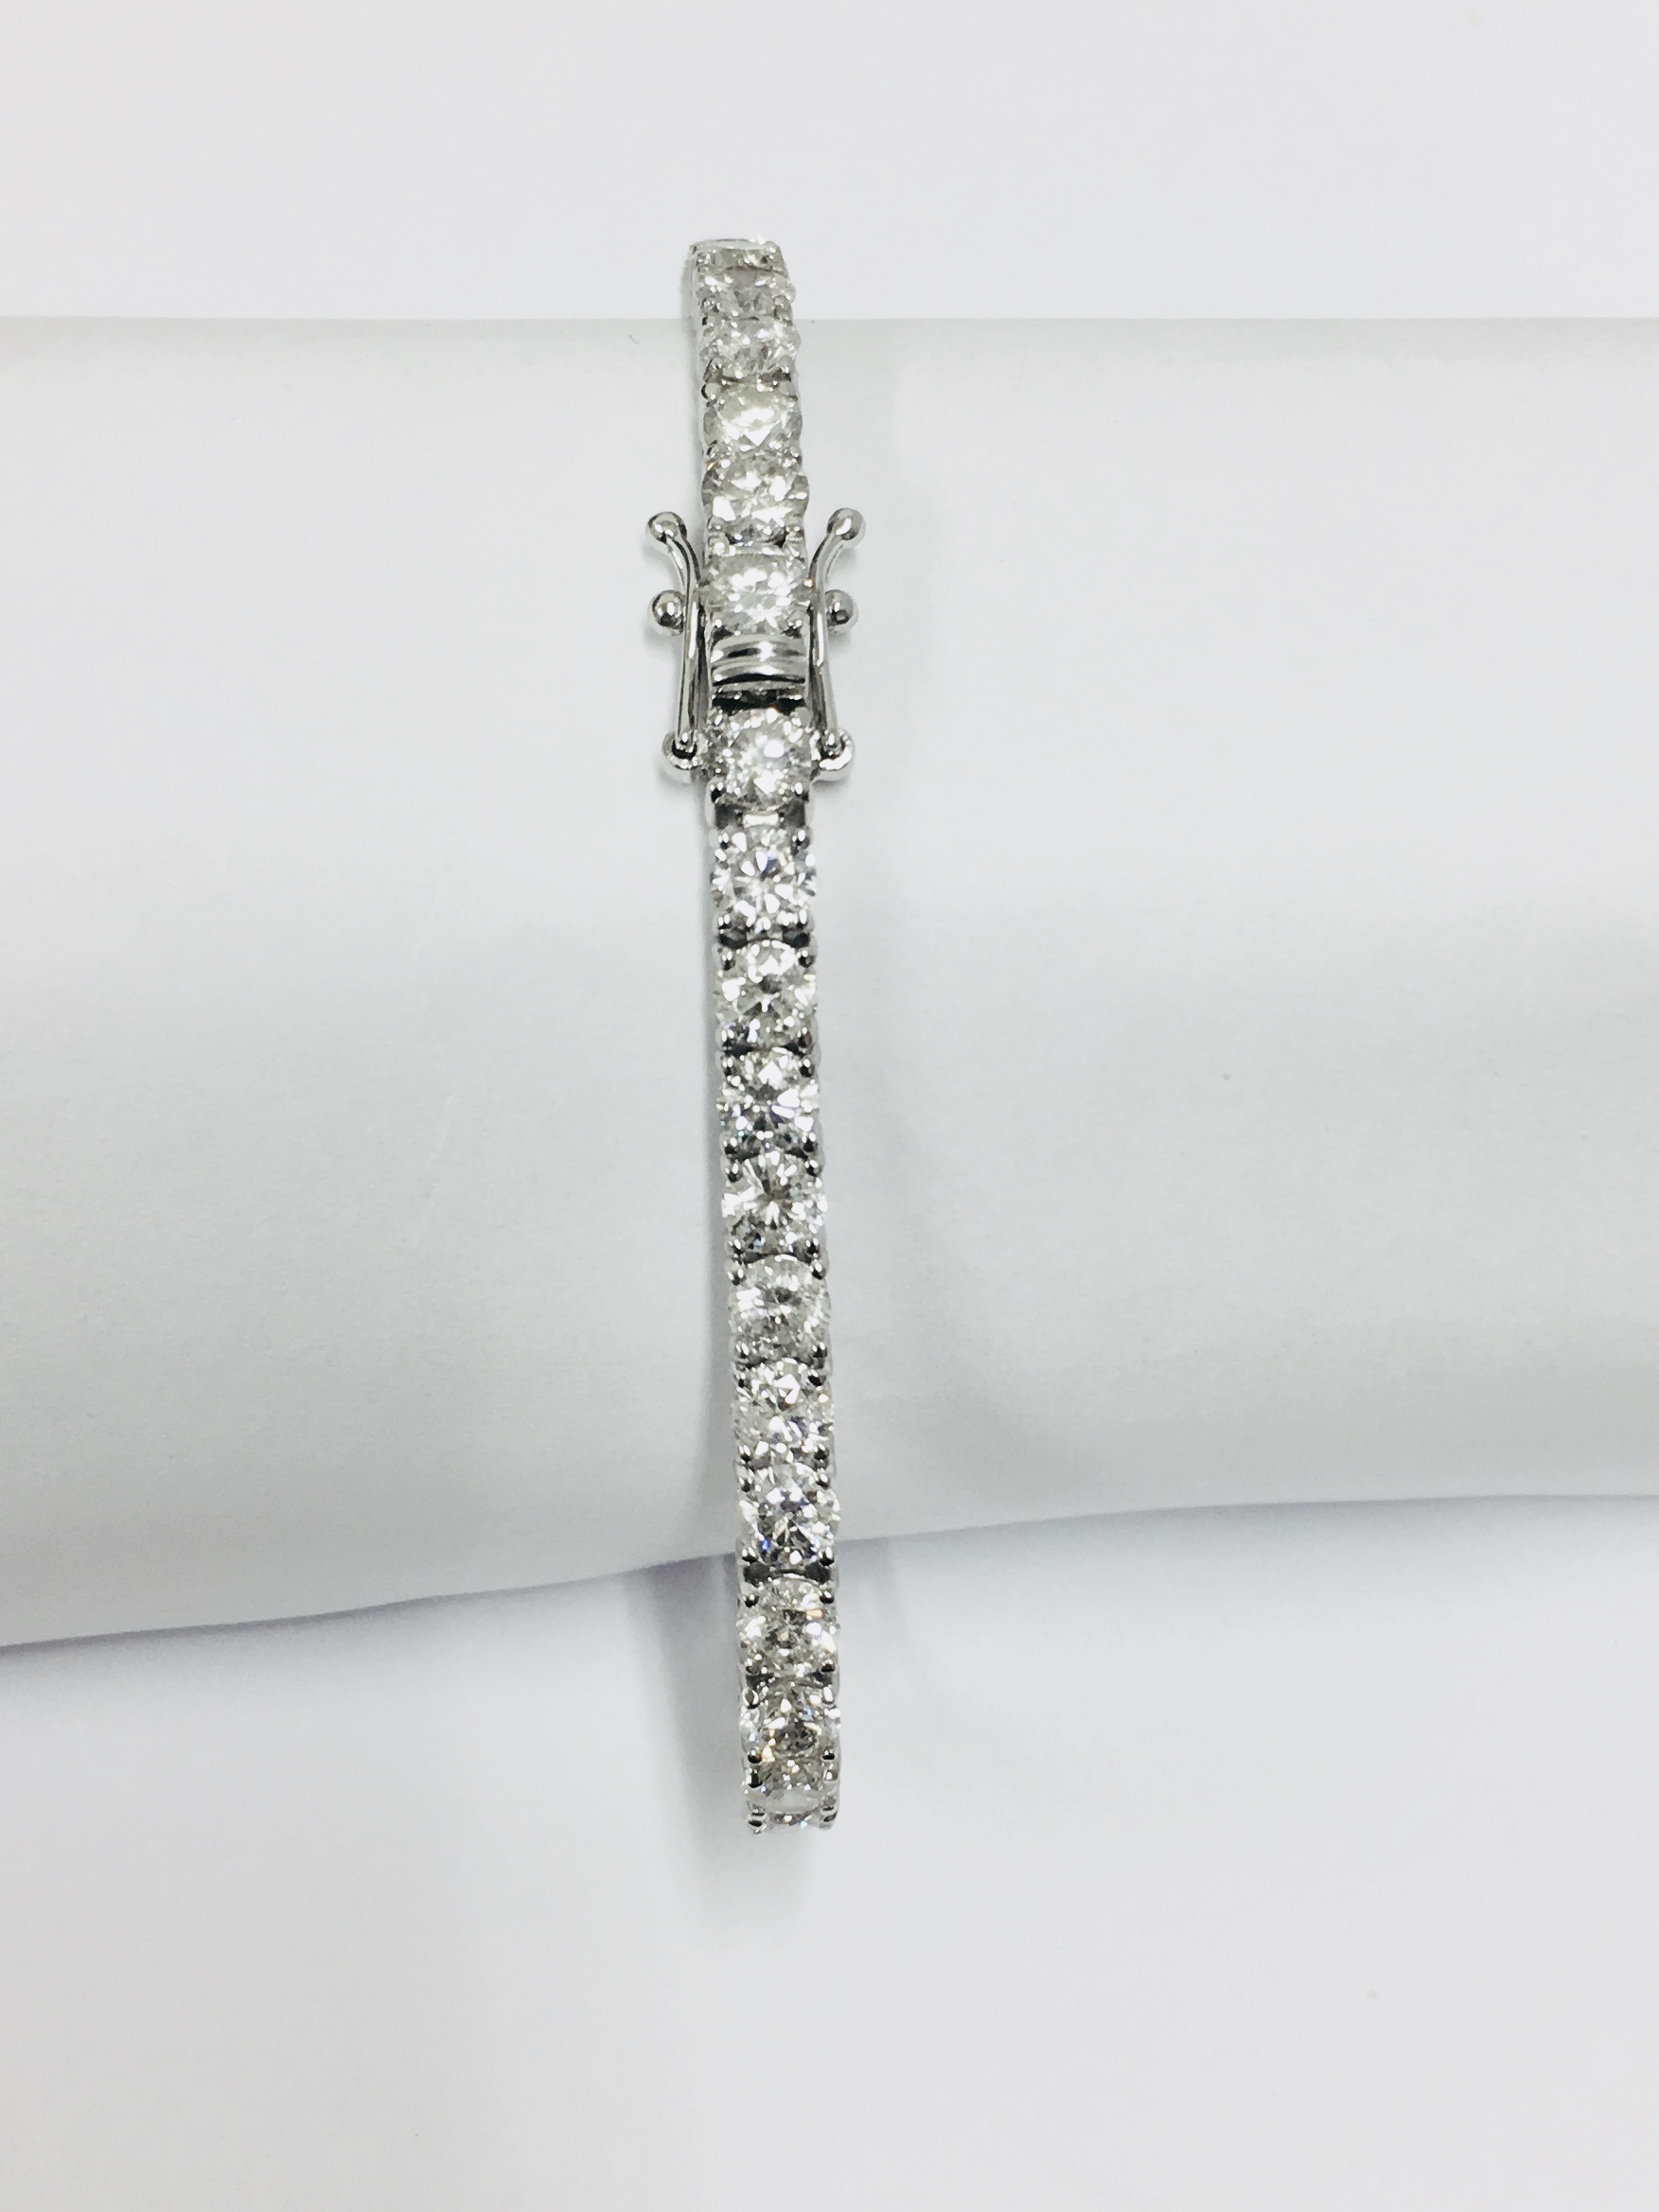 8.00ct Diamond tennis bracelet set with brilliant cut diamonds of G colour - Image 6 of 42